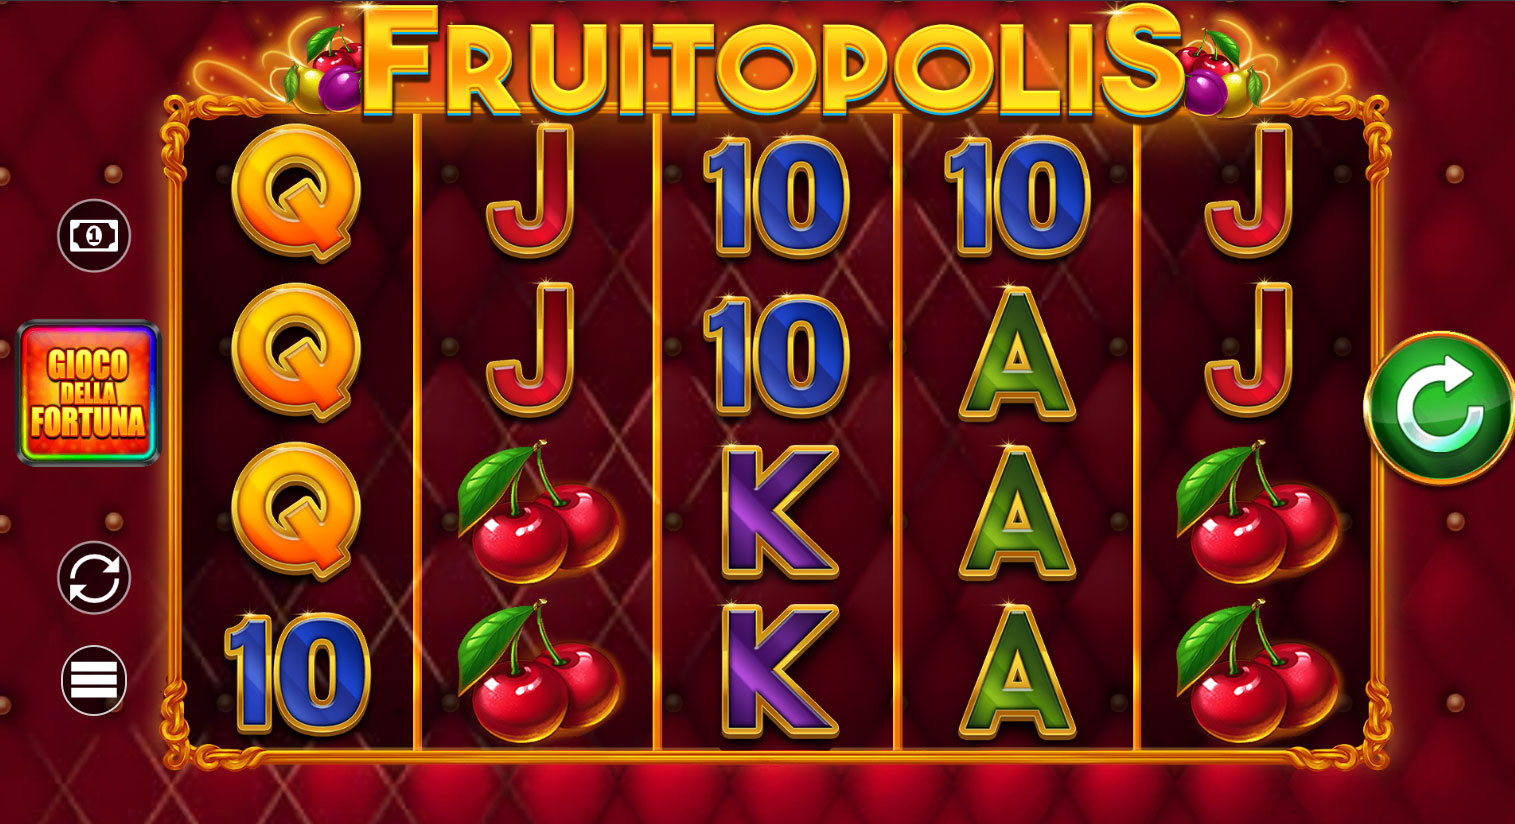 Slot Fruitopolis Fortune Play